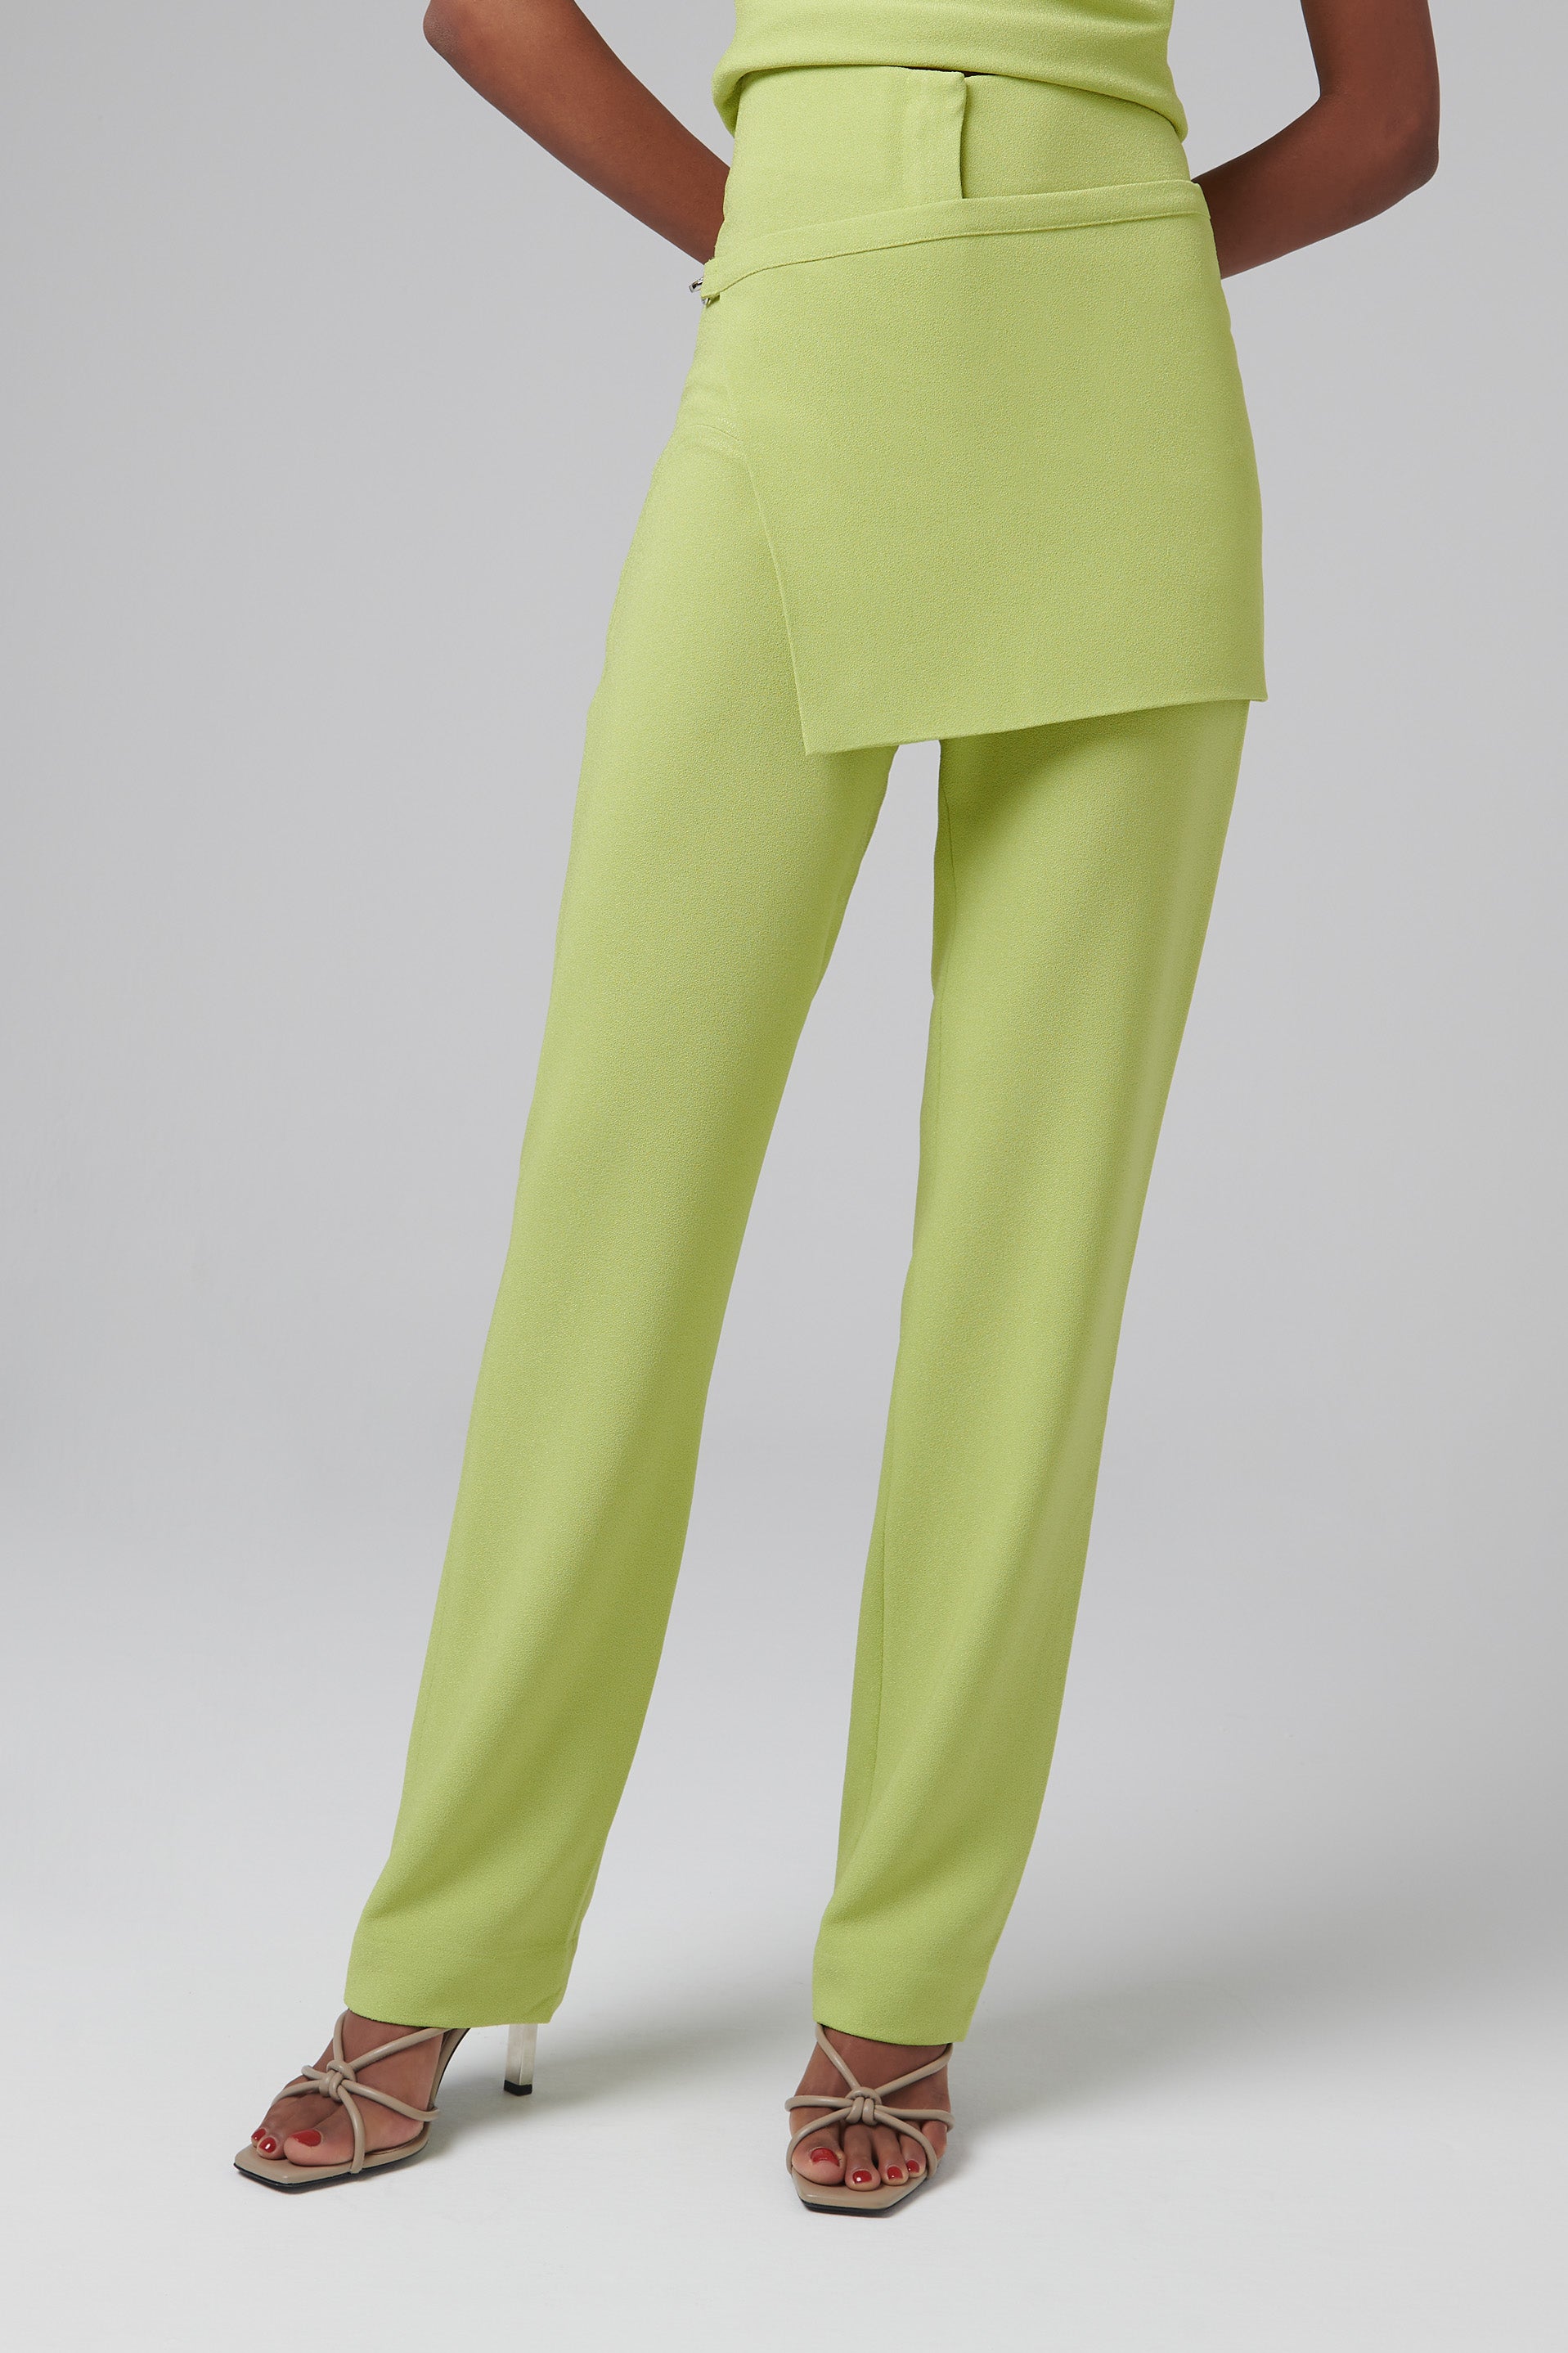 Mens Lime Green Suit Pants